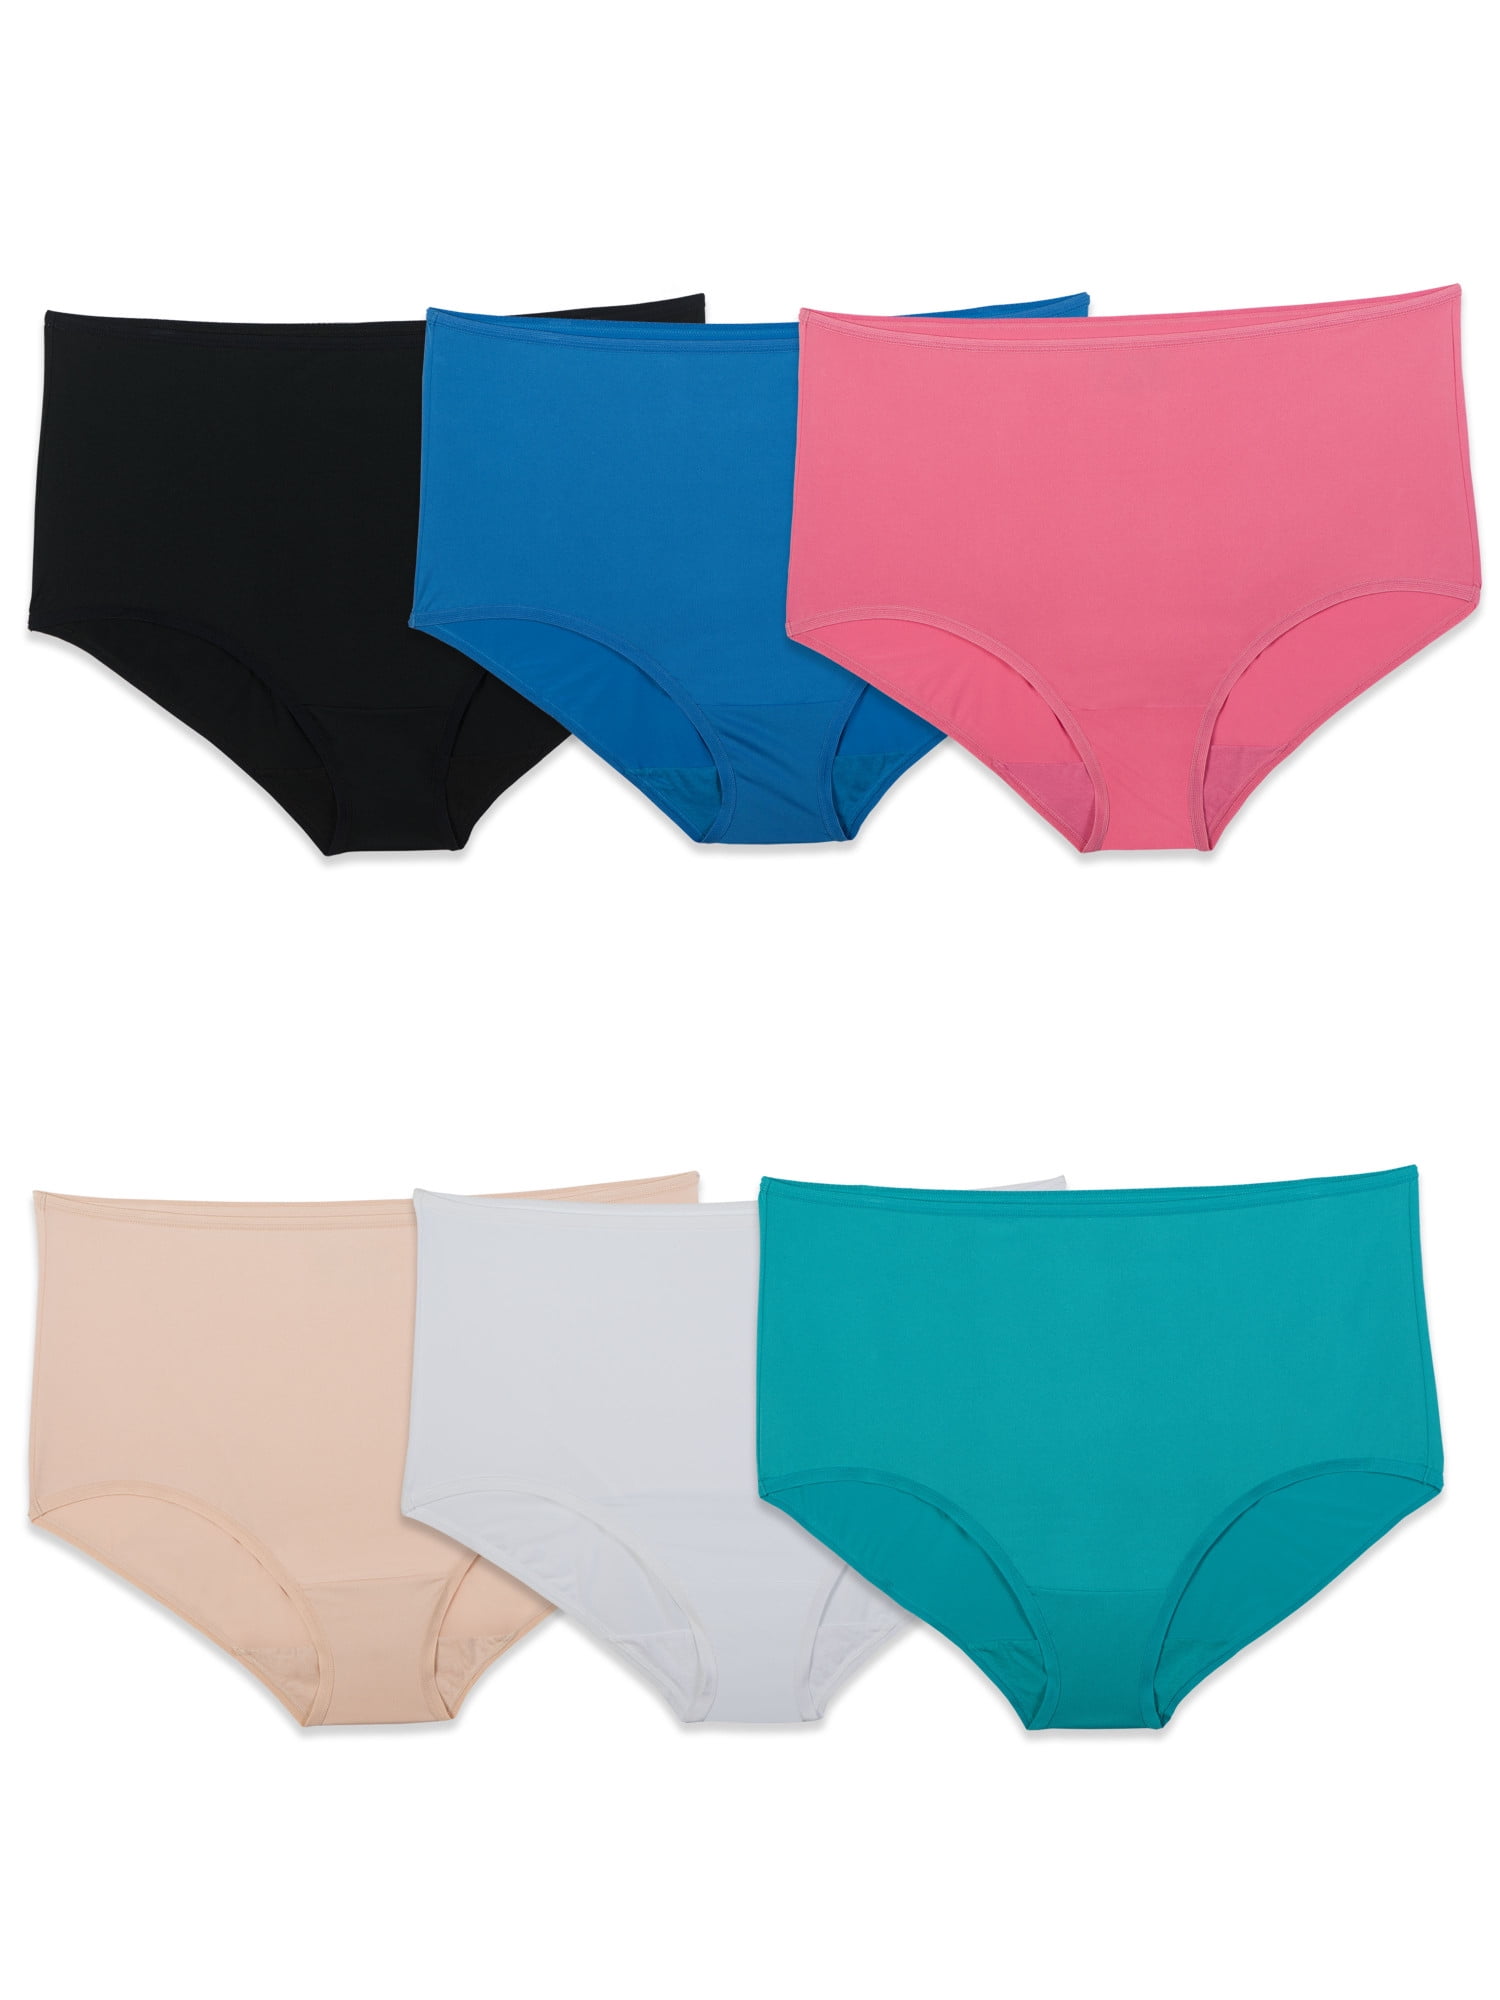 Fruit of the Loom Women's Microfiber Brief Underwear, 12 Pack, Sizes M-3XL